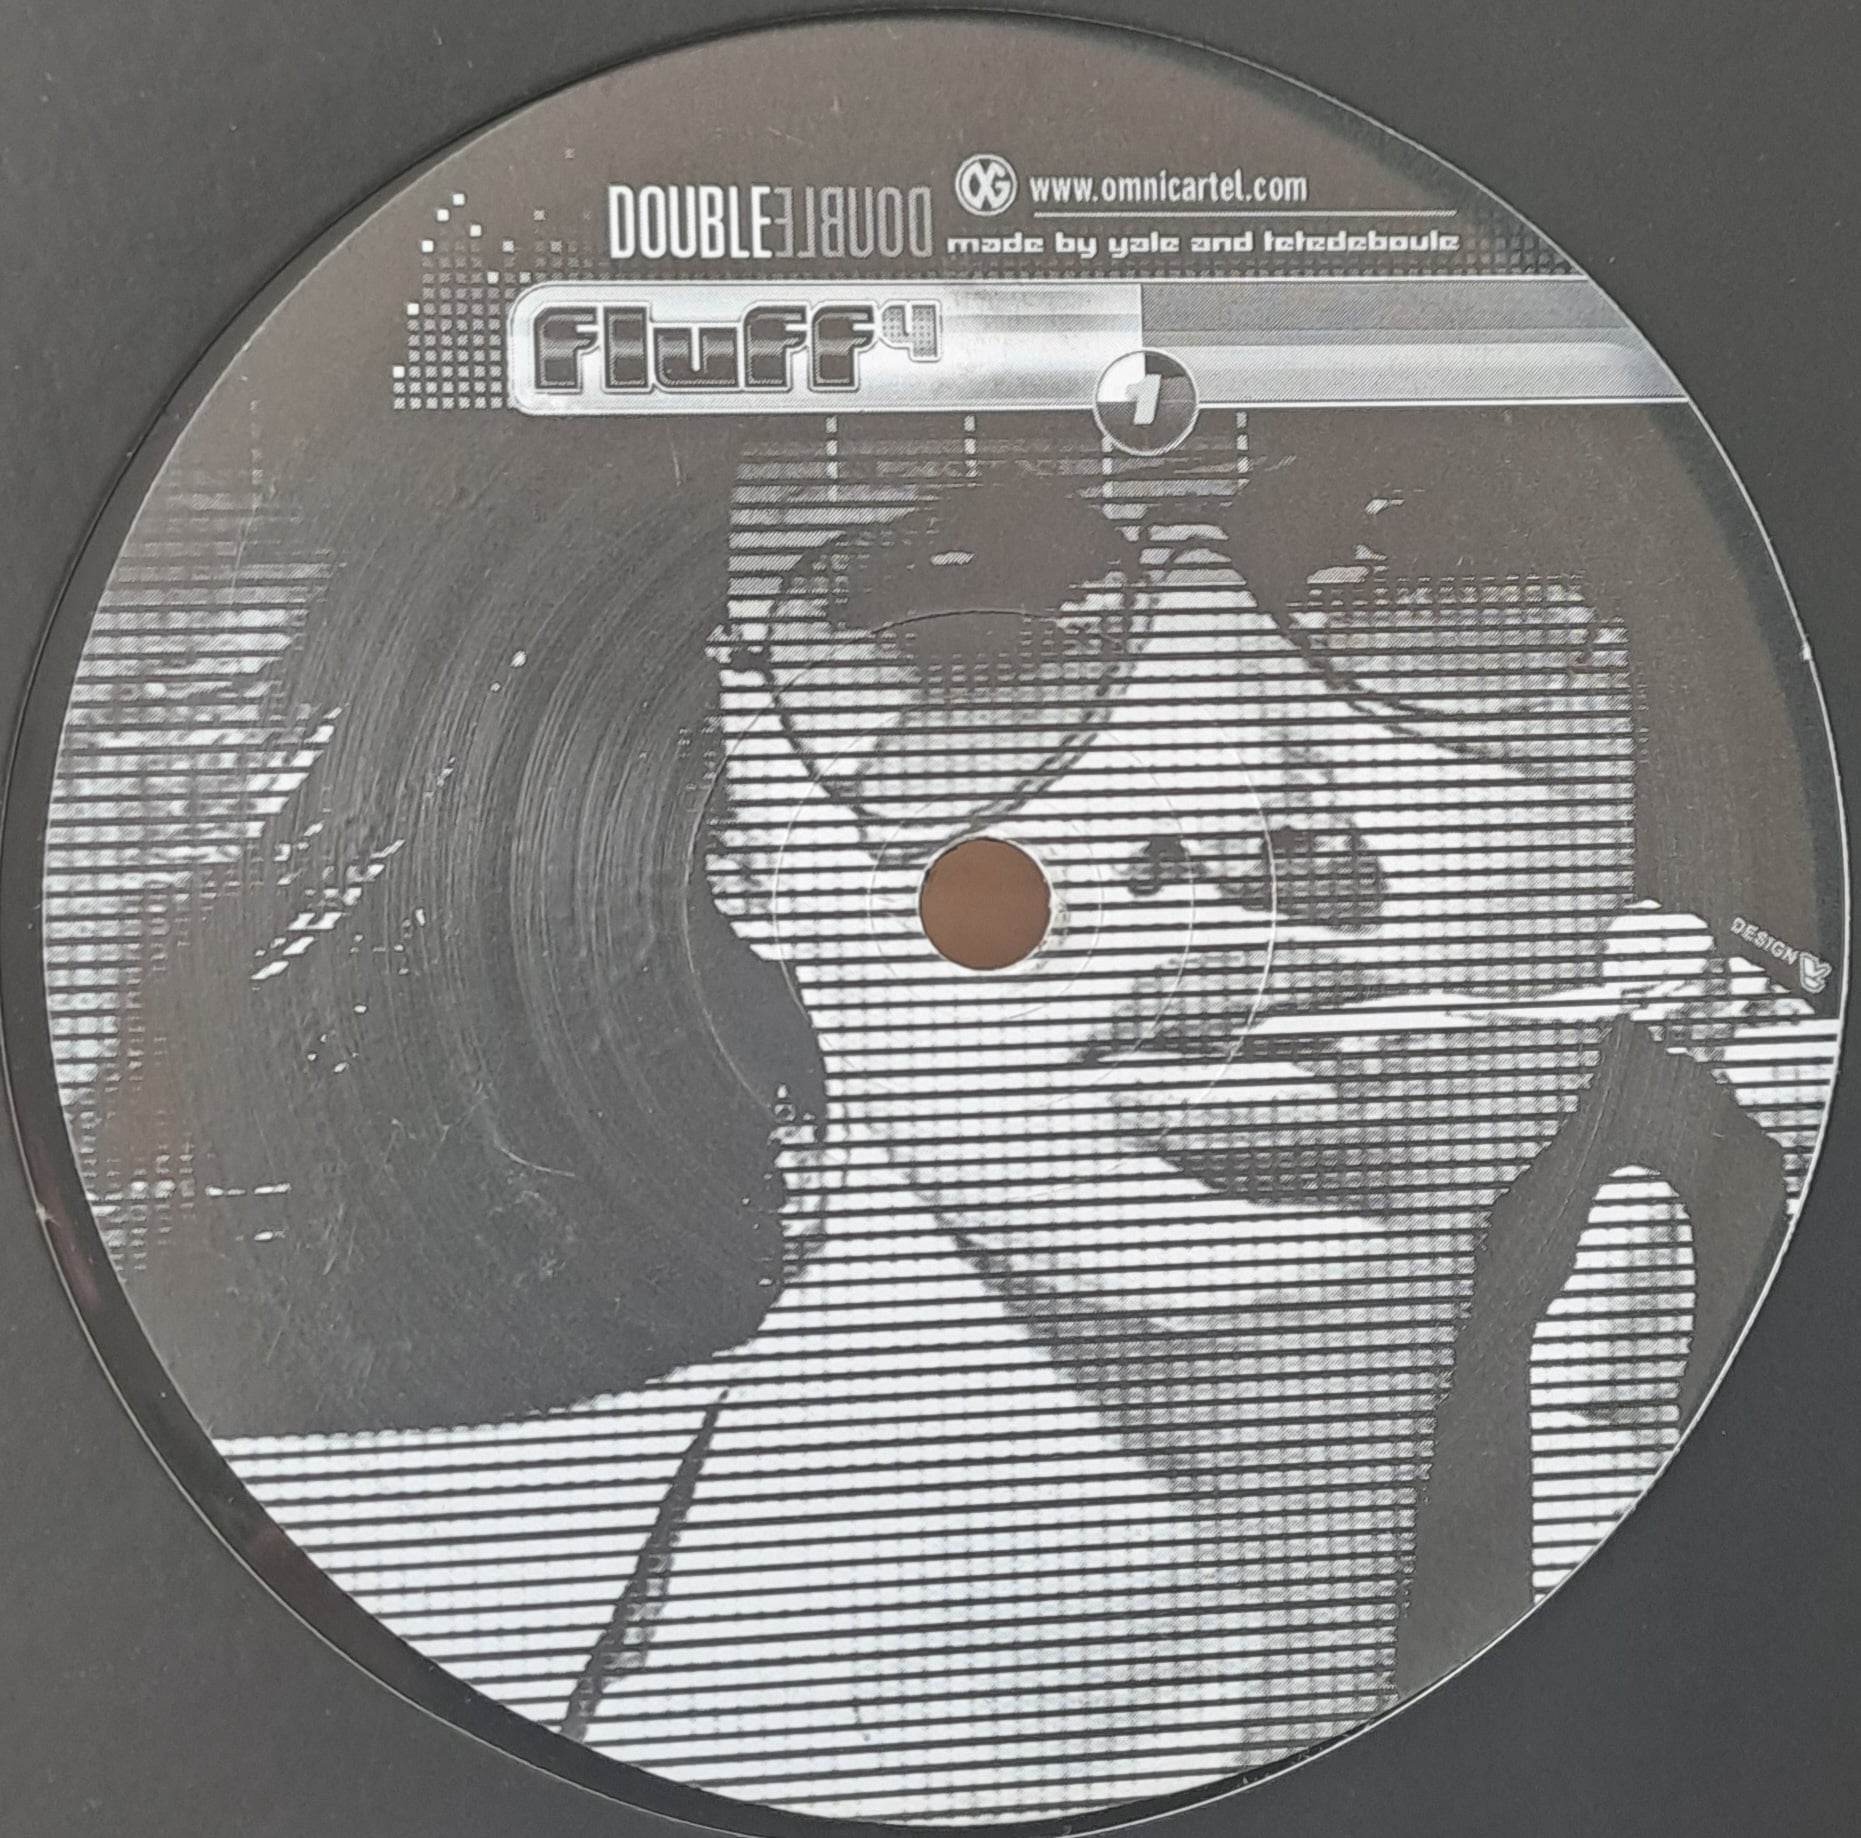 Fluff Records 04 (double album) - vinyle freetekno